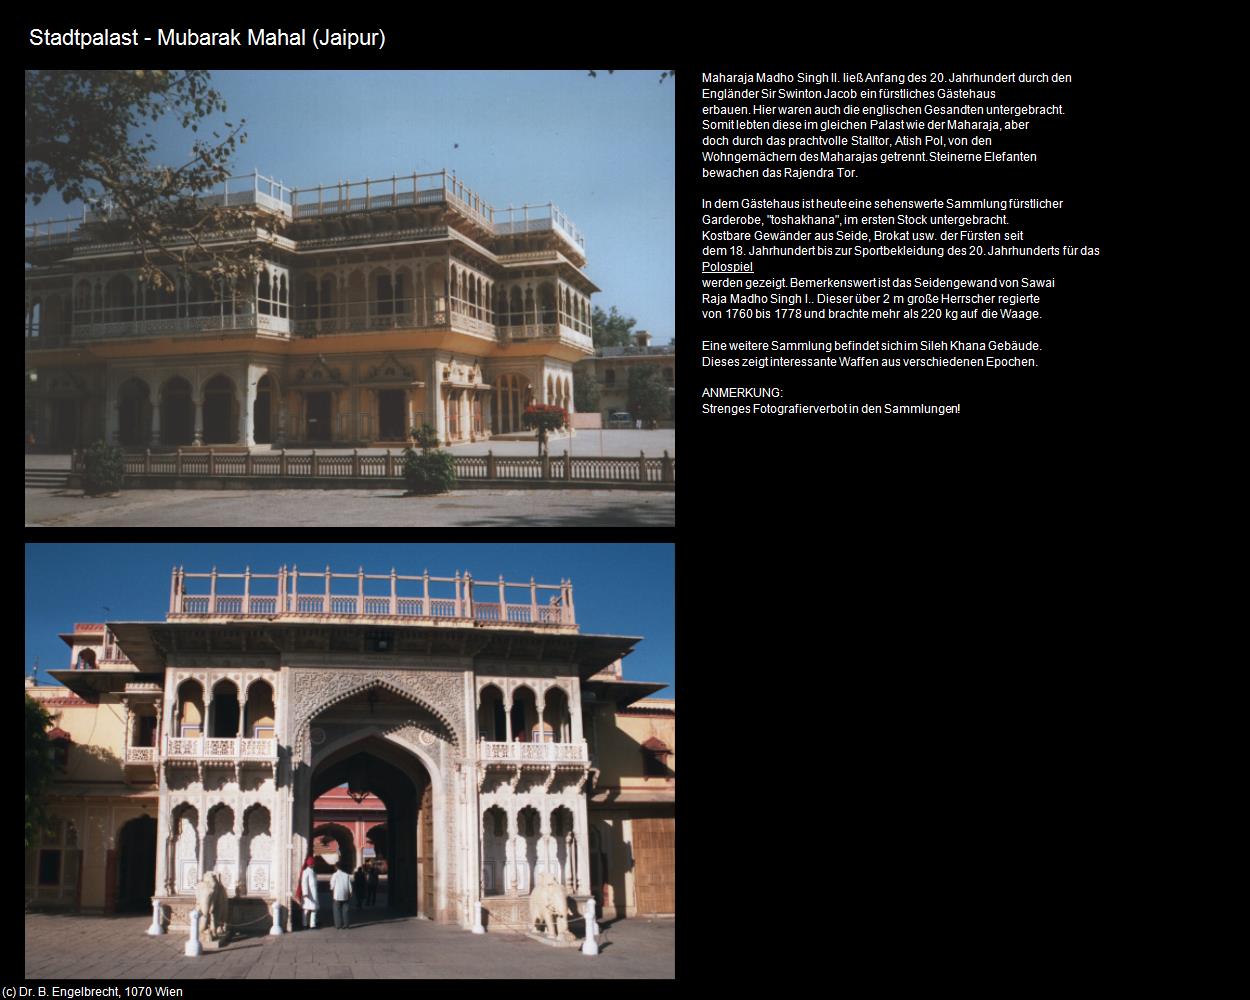 Stadtpalast - Mubarak Mahal (Jaipur) in Rajasthan - das Land der Könige(c)B.Engelbrecht